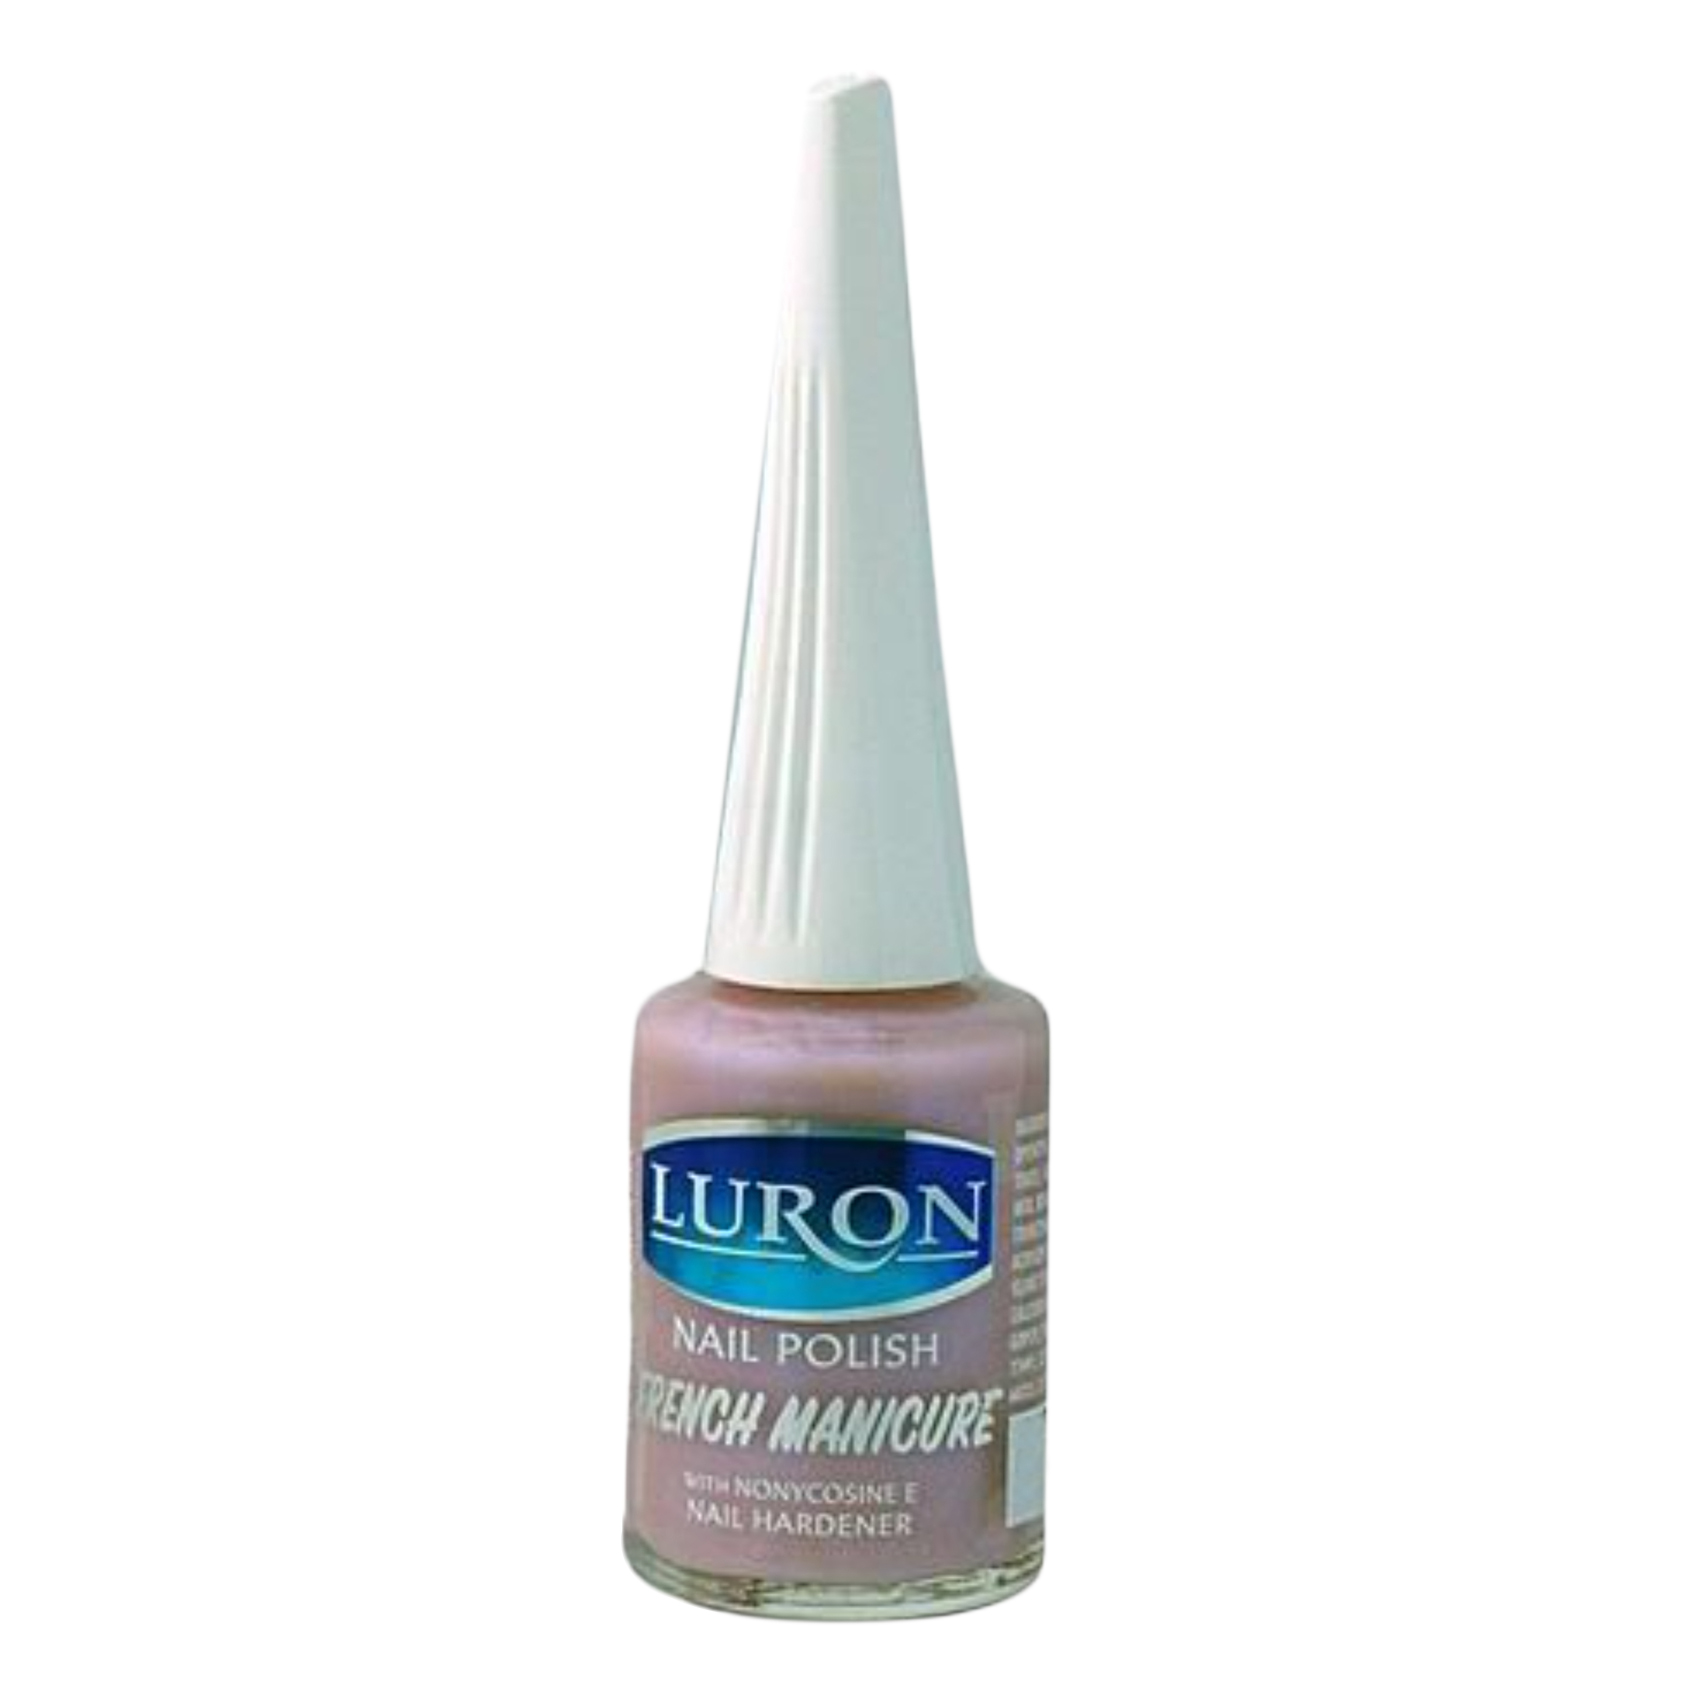 Luron French Manicure Nail Polish No. 216 14ml